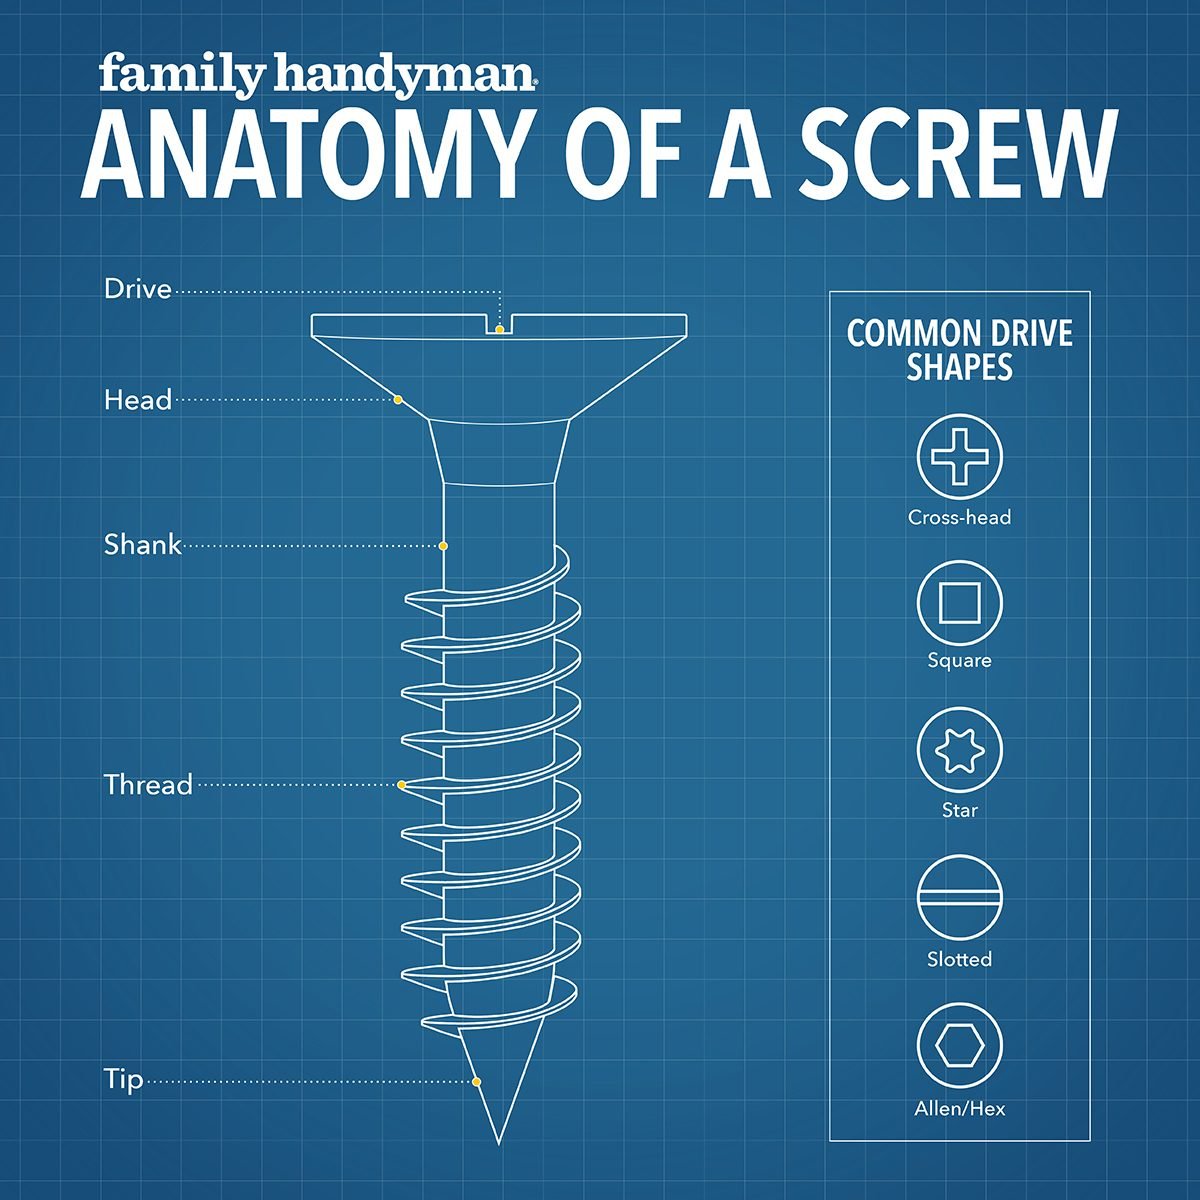 6 Types of Screws Every DIYer Needs To Know